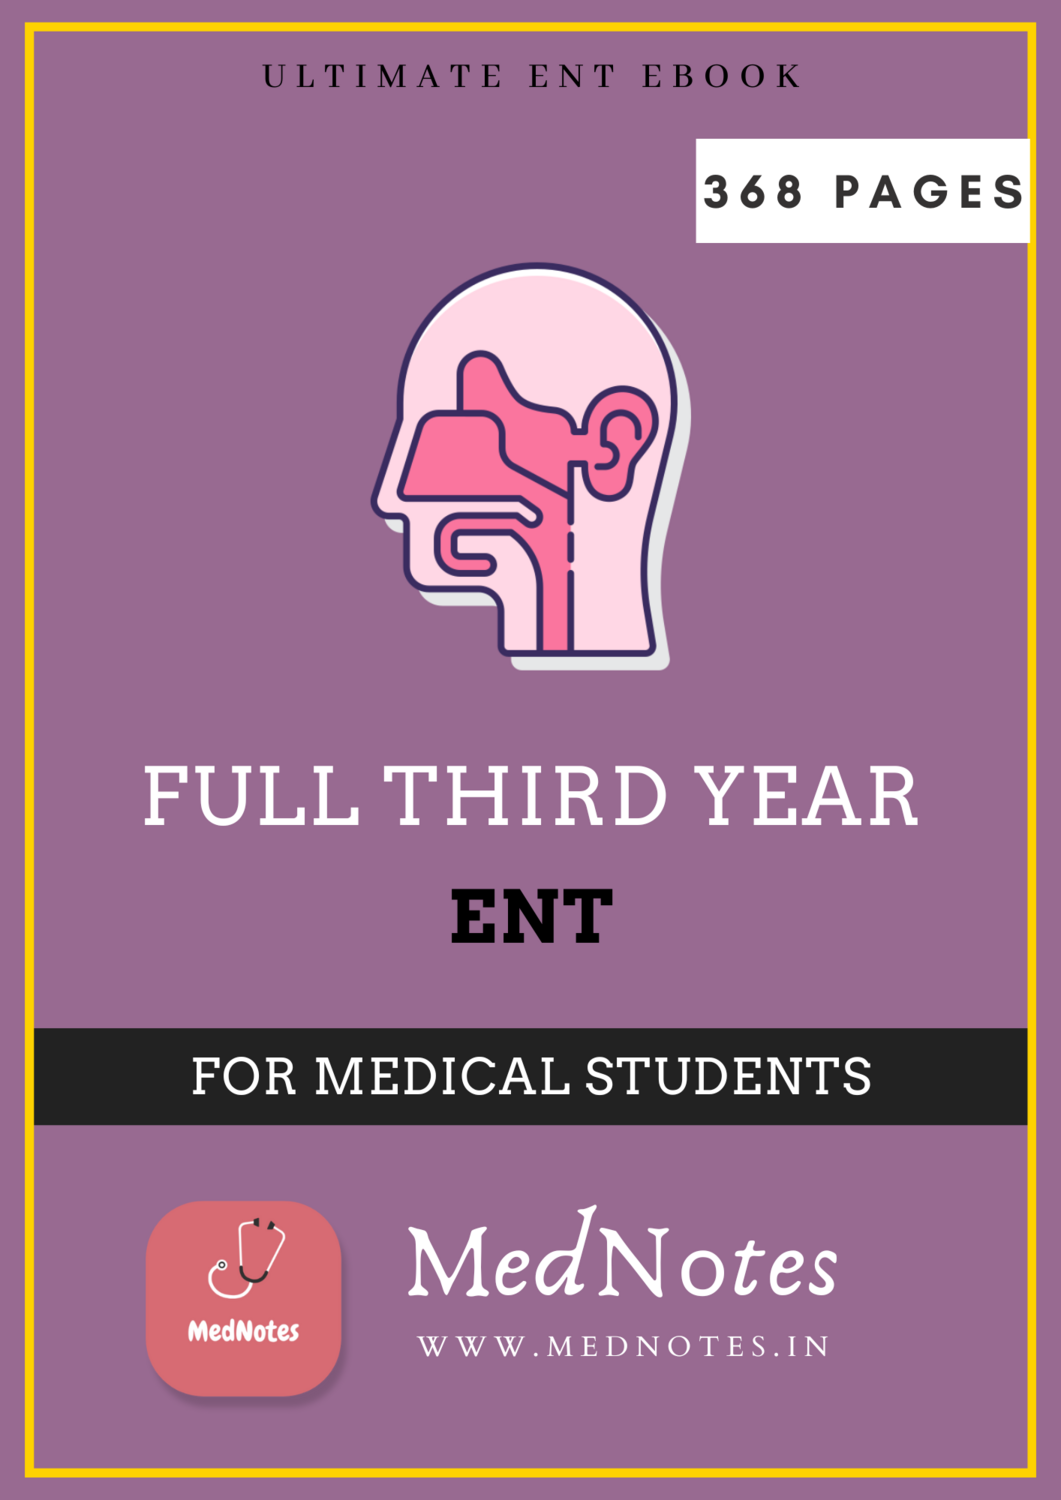 Full Third Year ENT - MedNotes Ebook